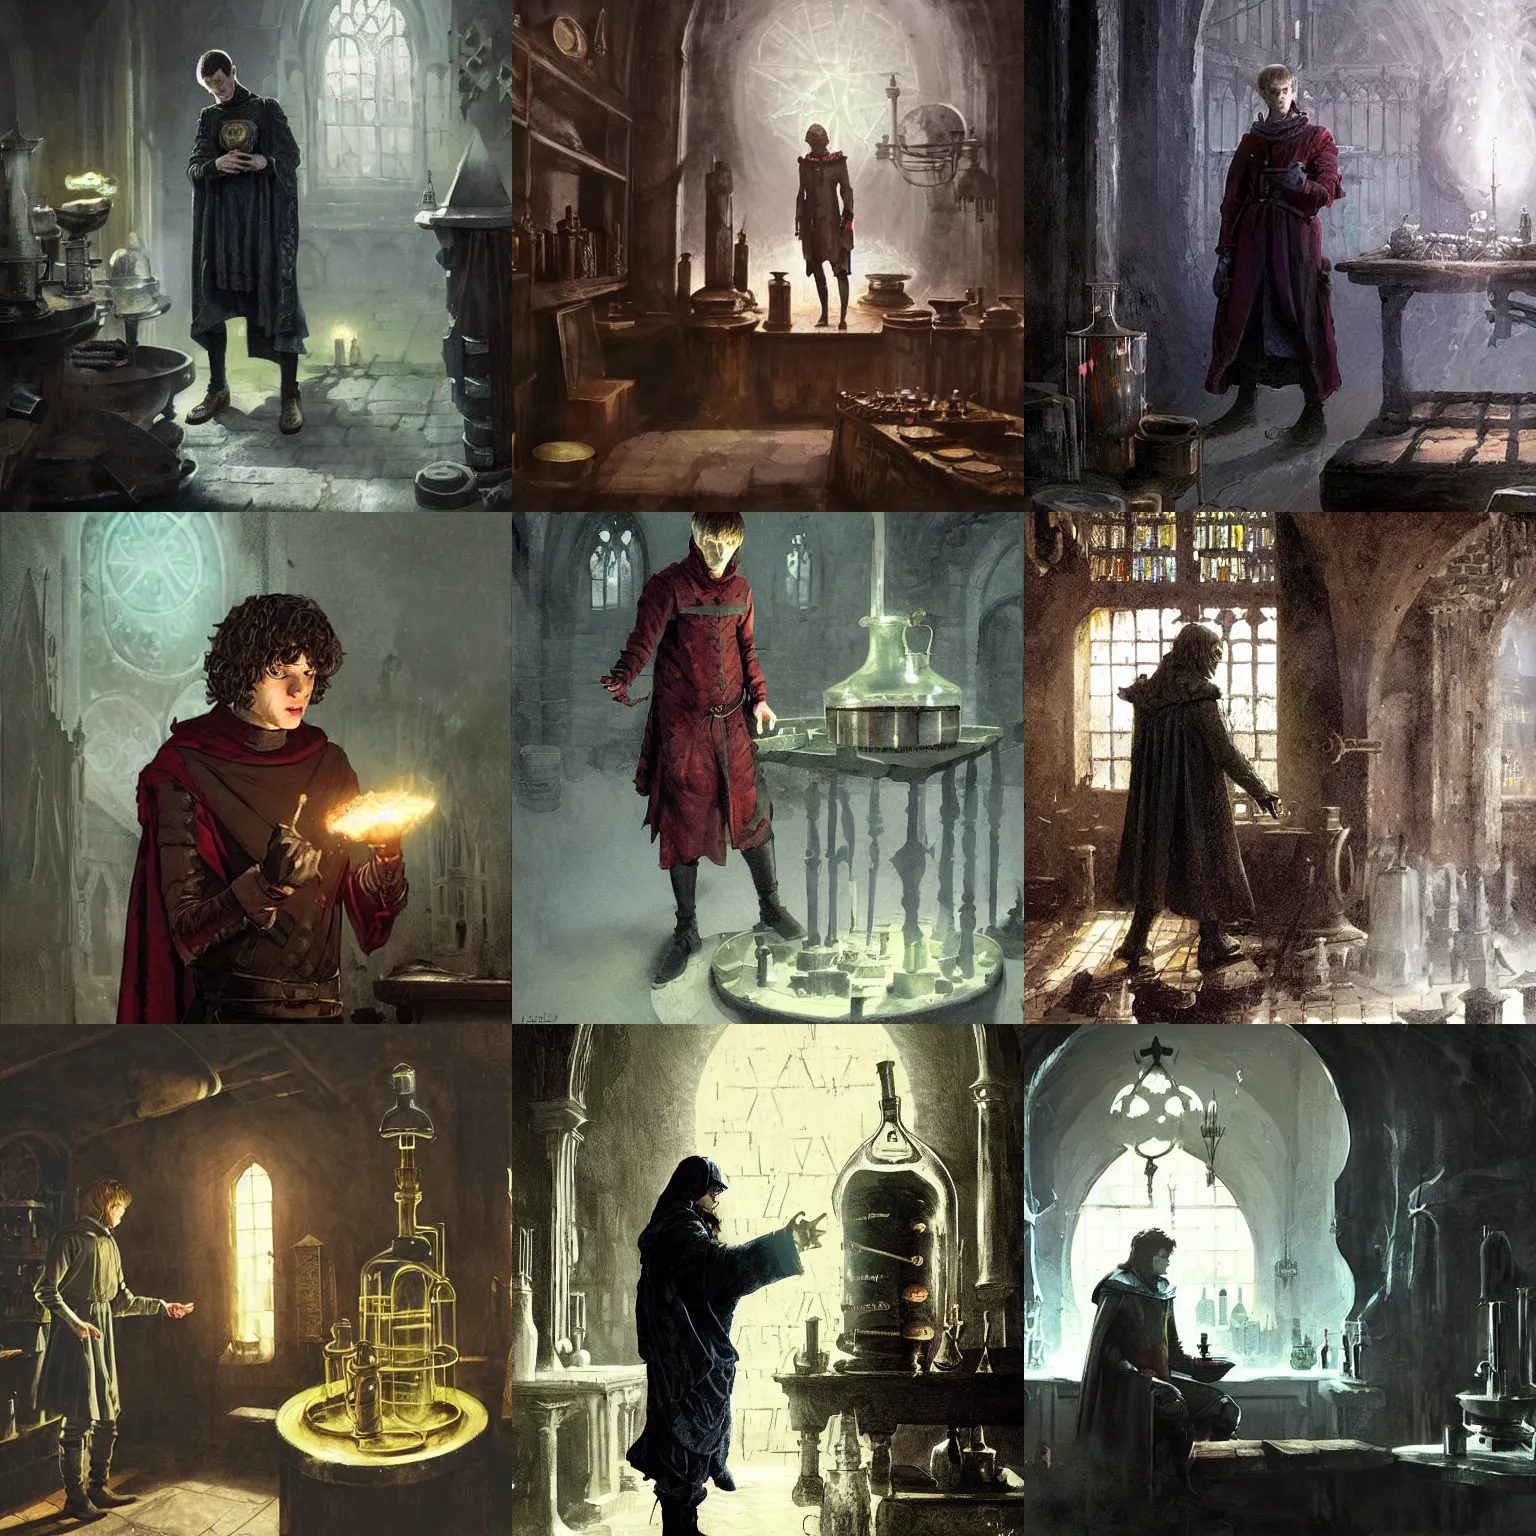 Prompt: jesse eisenberg as an enigmatic medieval alchemist in a alchemy lab. dark shadows, colorful, ( low key light ), law contrasts, fantasy concept art by jakub rozalski, jan matejko, and j. dickenson